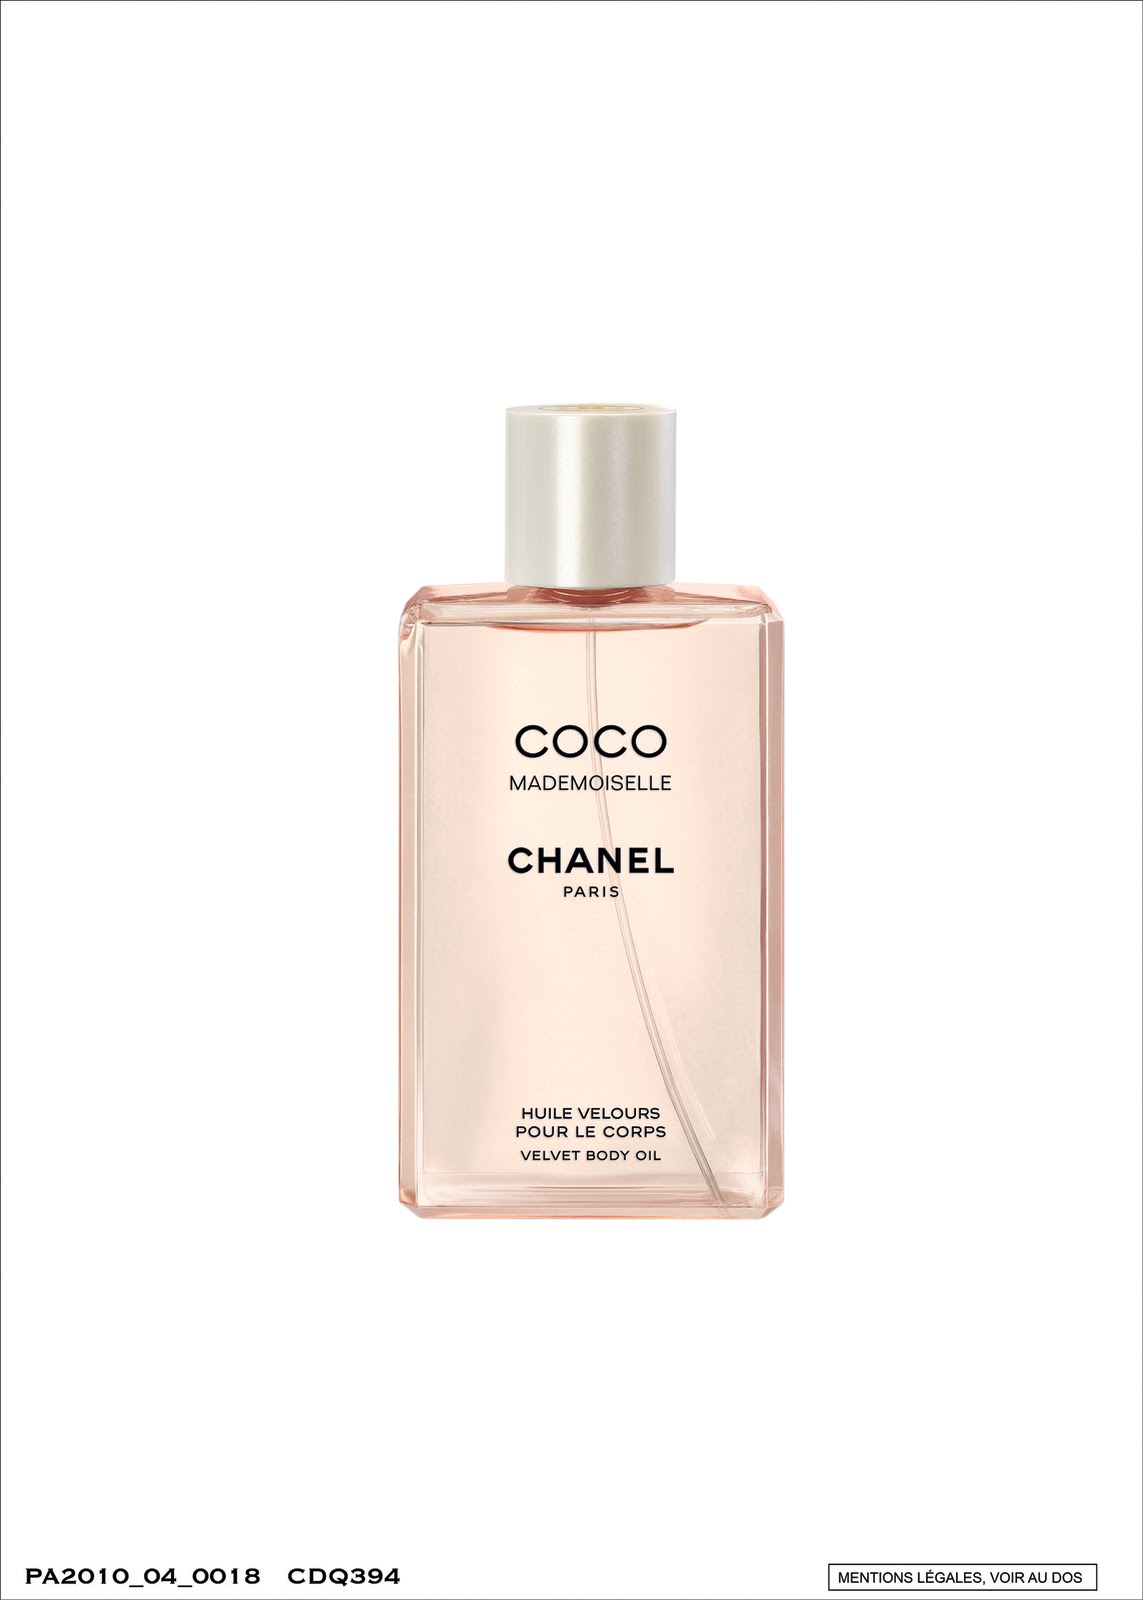 Chanel Coco Mademoiselle - Body Oil, Shower Gel, Body Lotion, Foam Bath,  Body Exfoliant